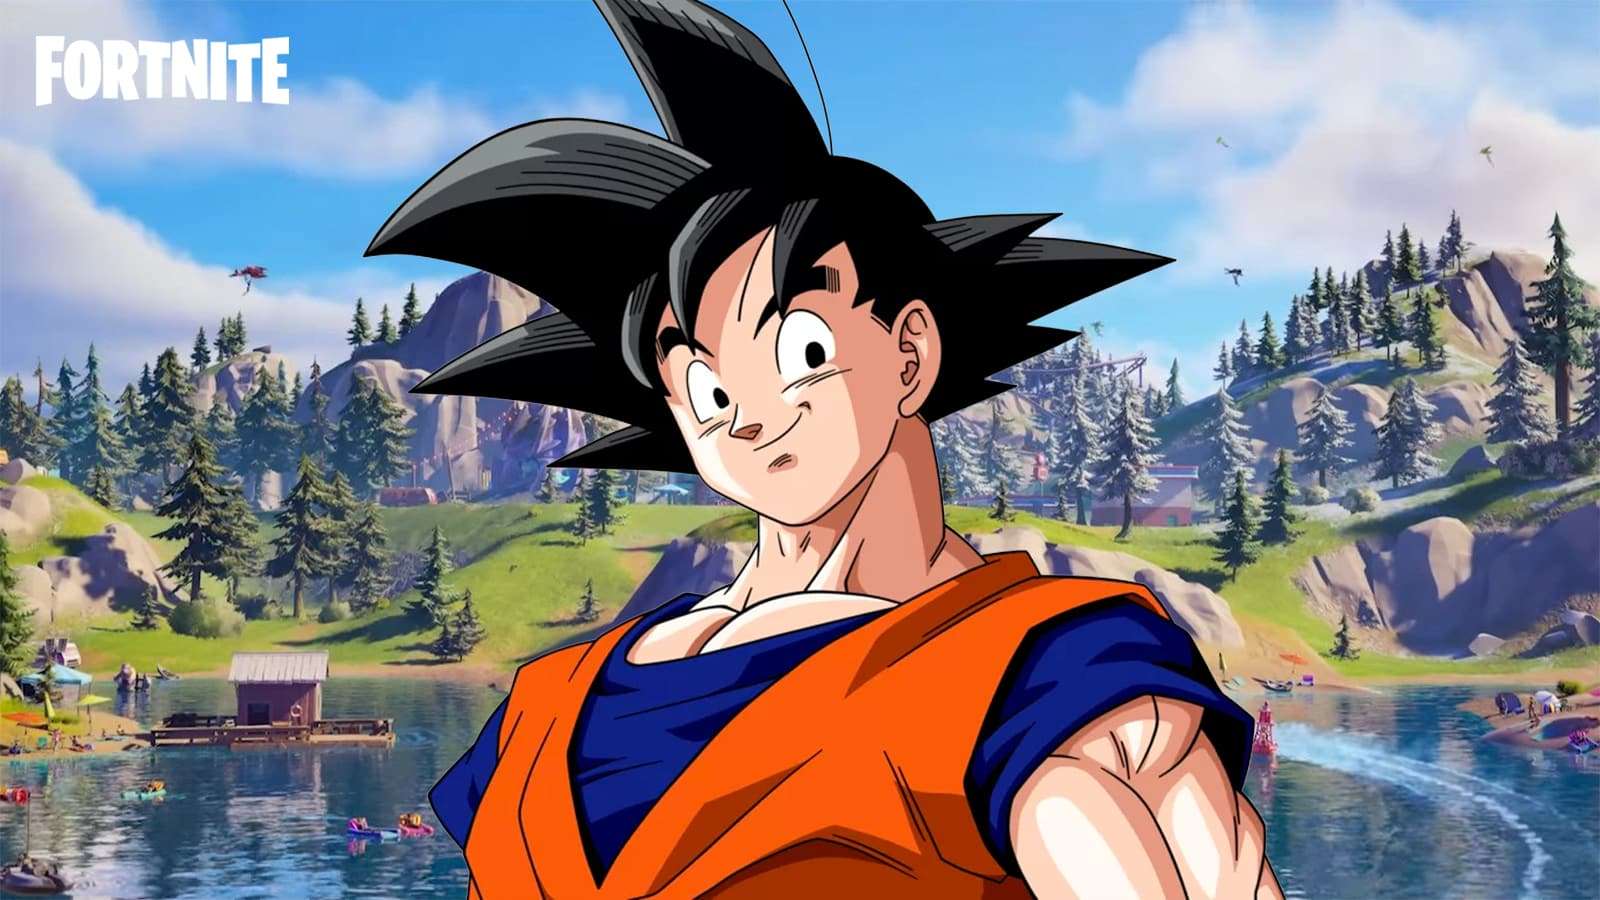 Dragon Ball character Goku appearing as a skin in Fortnite